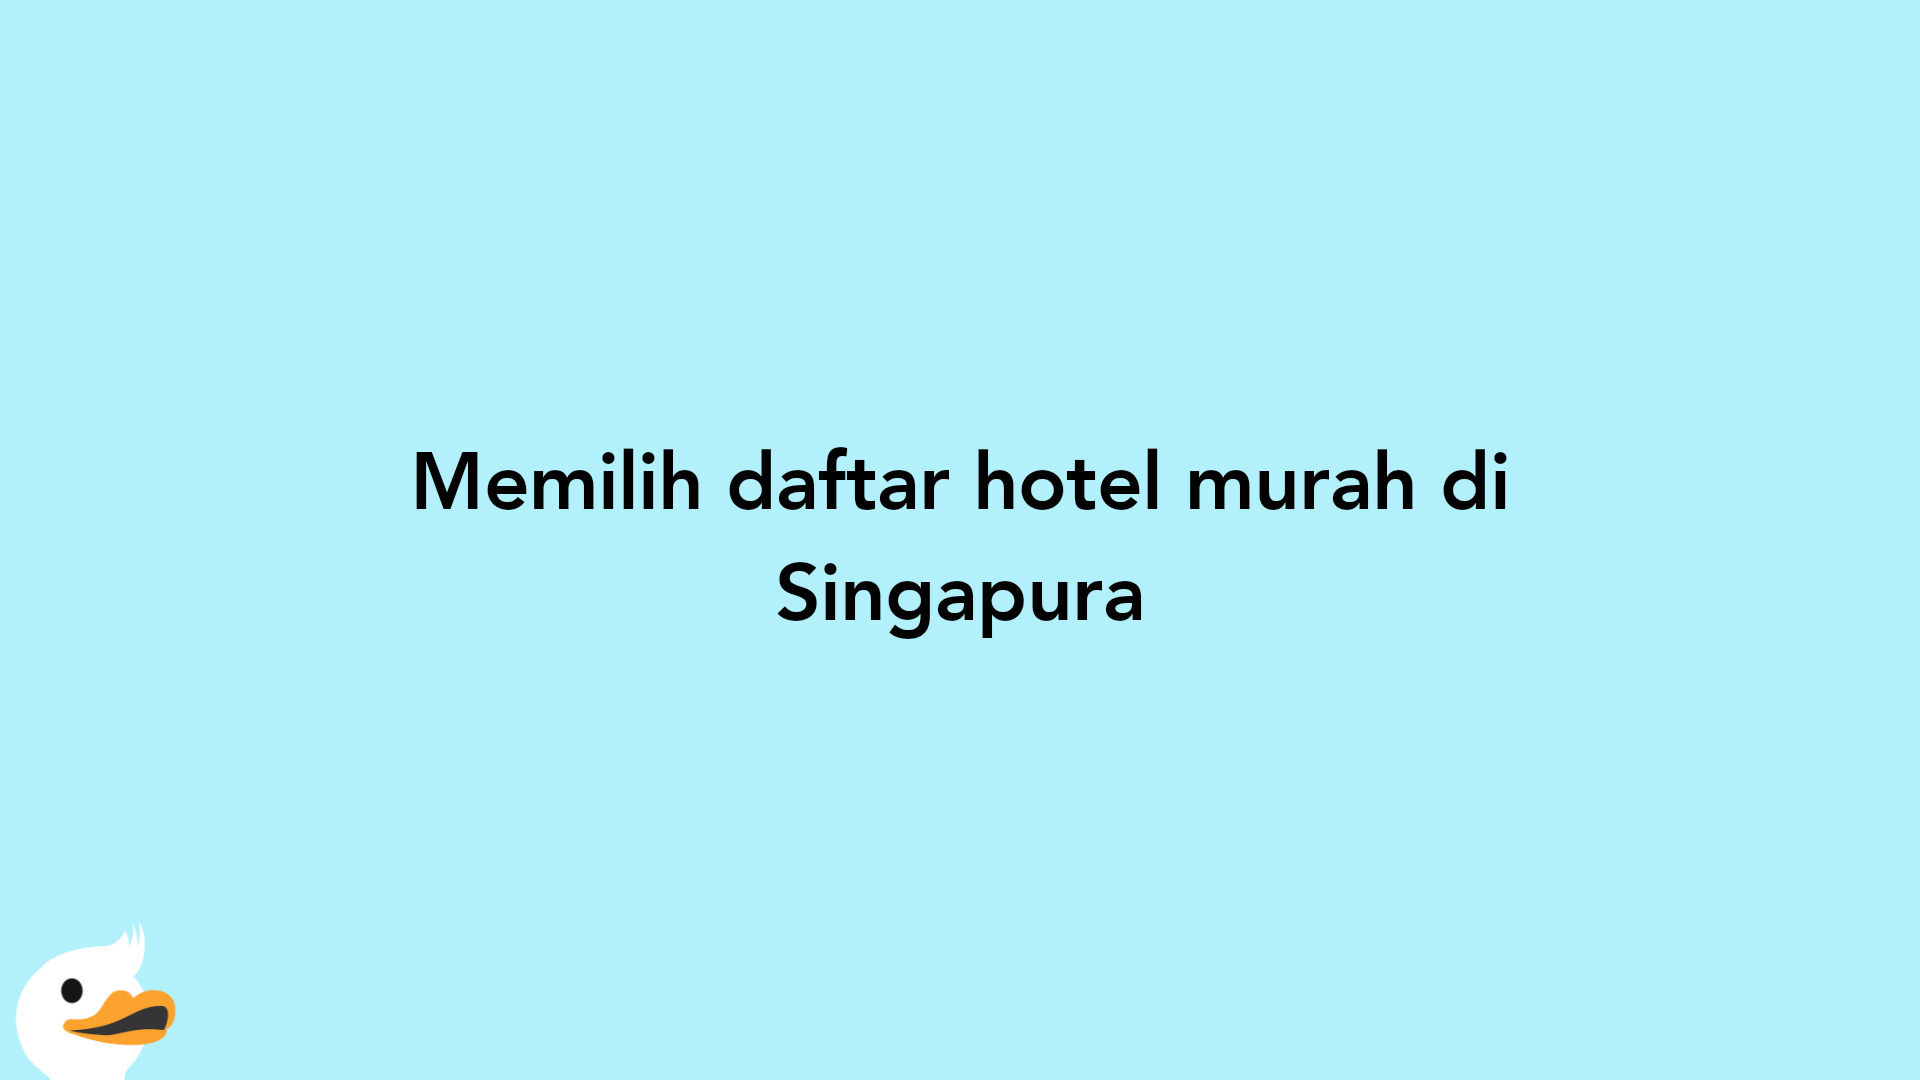 Memilih daftar hotel murah di Singapura